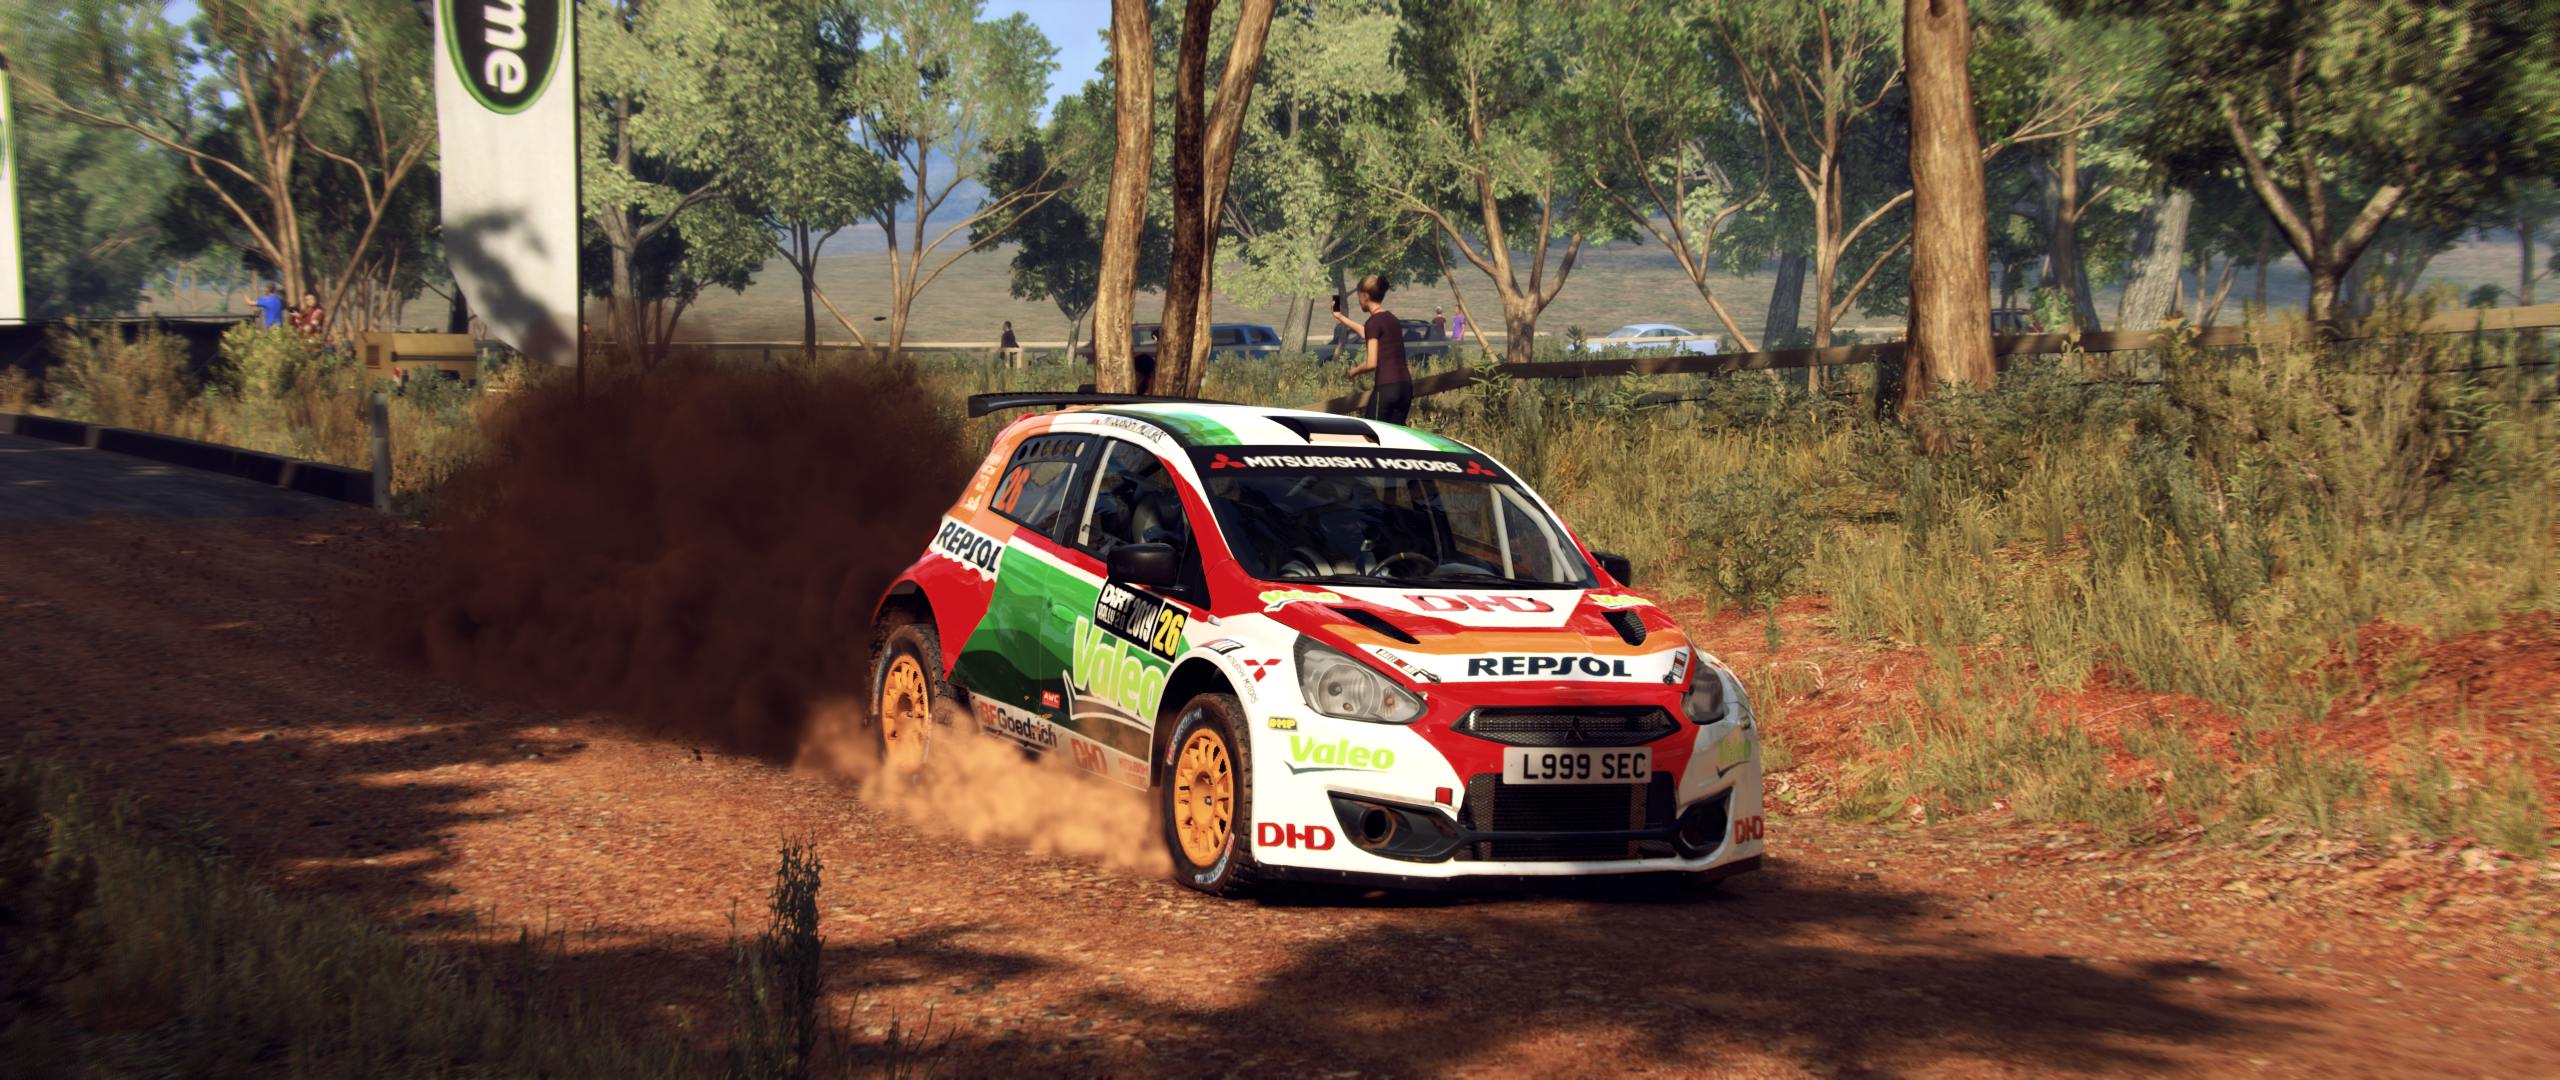 Dirt Rally 2 Screenshot 2021.04.30 - 11.01.37.19.jpg